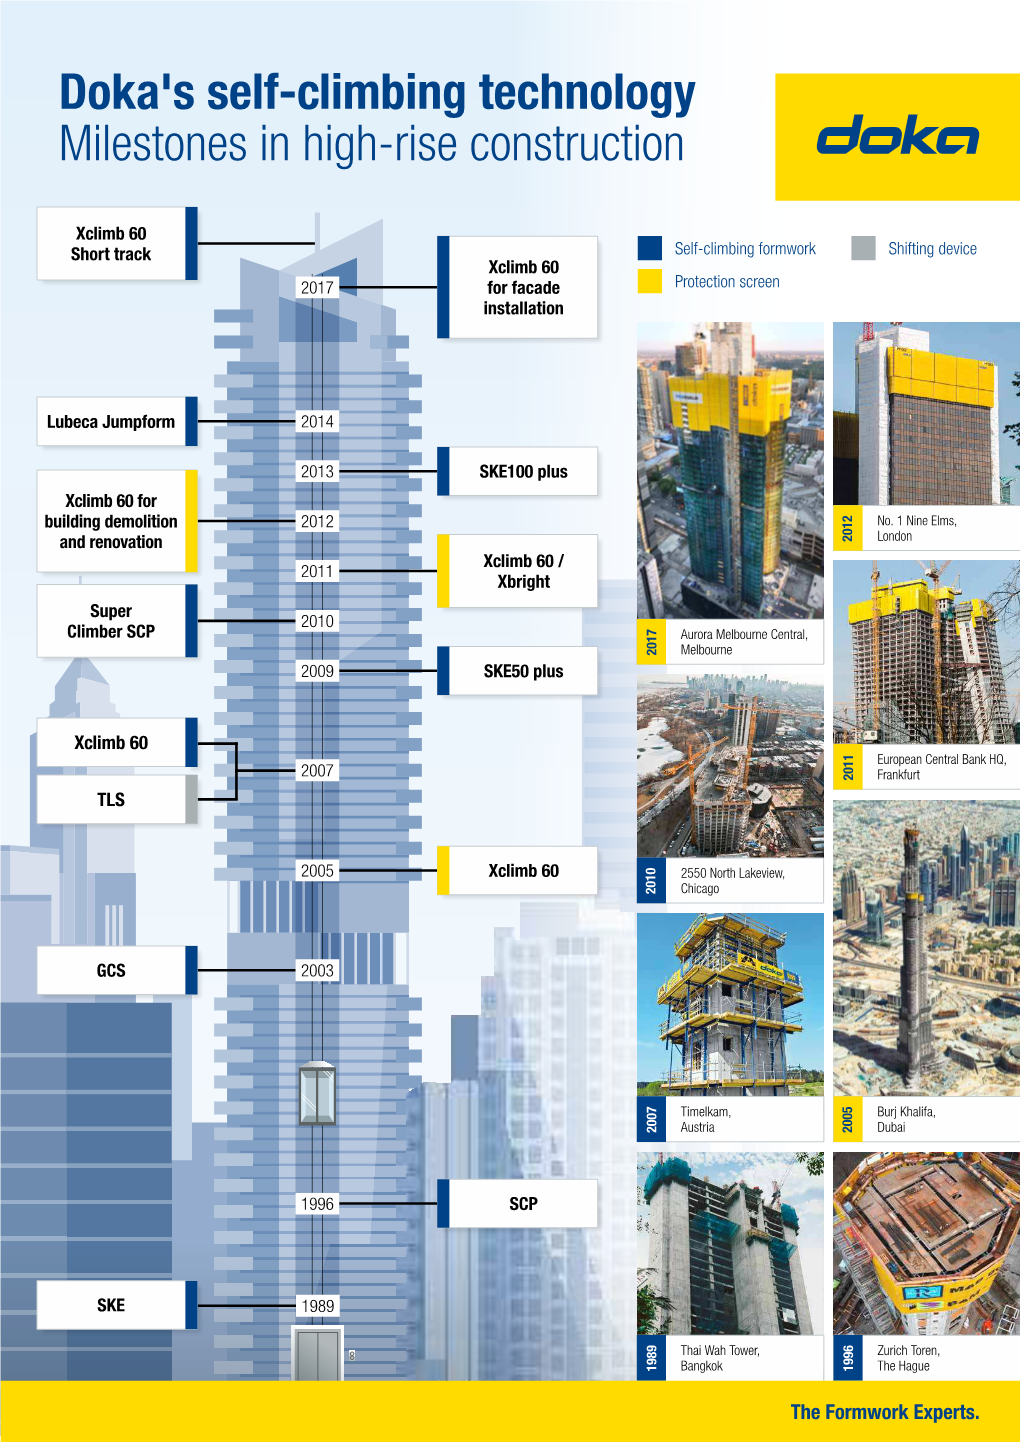 Doka's Self-Climbing Technology Milestones in High-Rise Construction